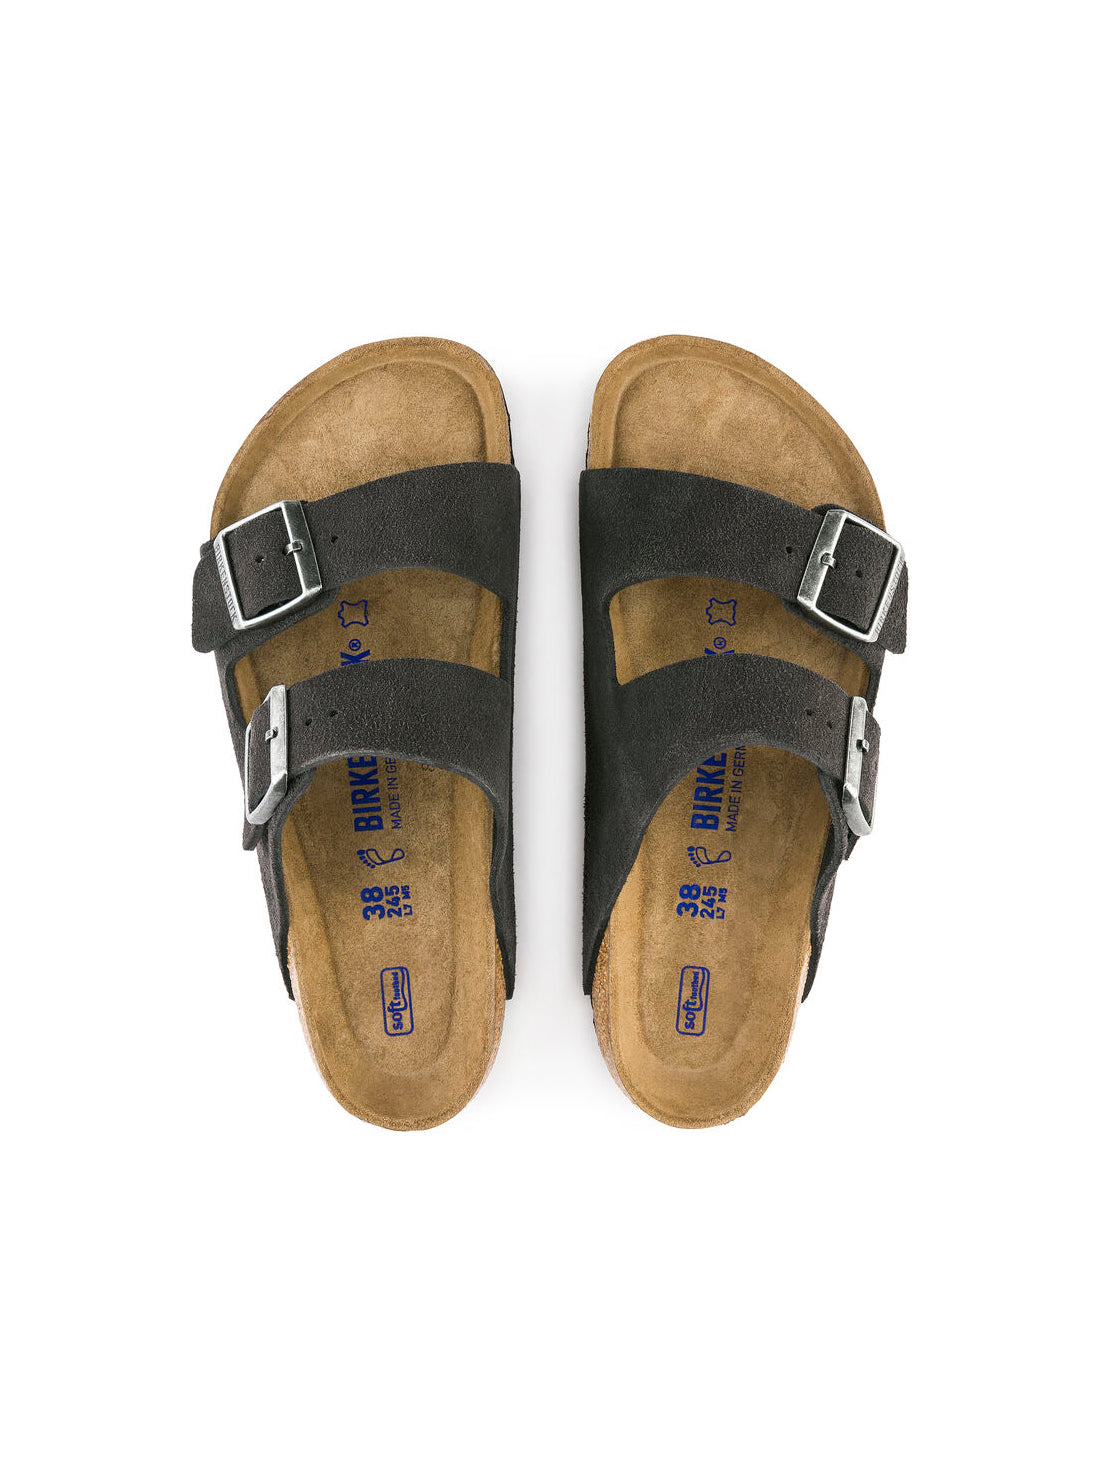 birkenstock arizona soft footbed sandal in suede leather velvet gray regular